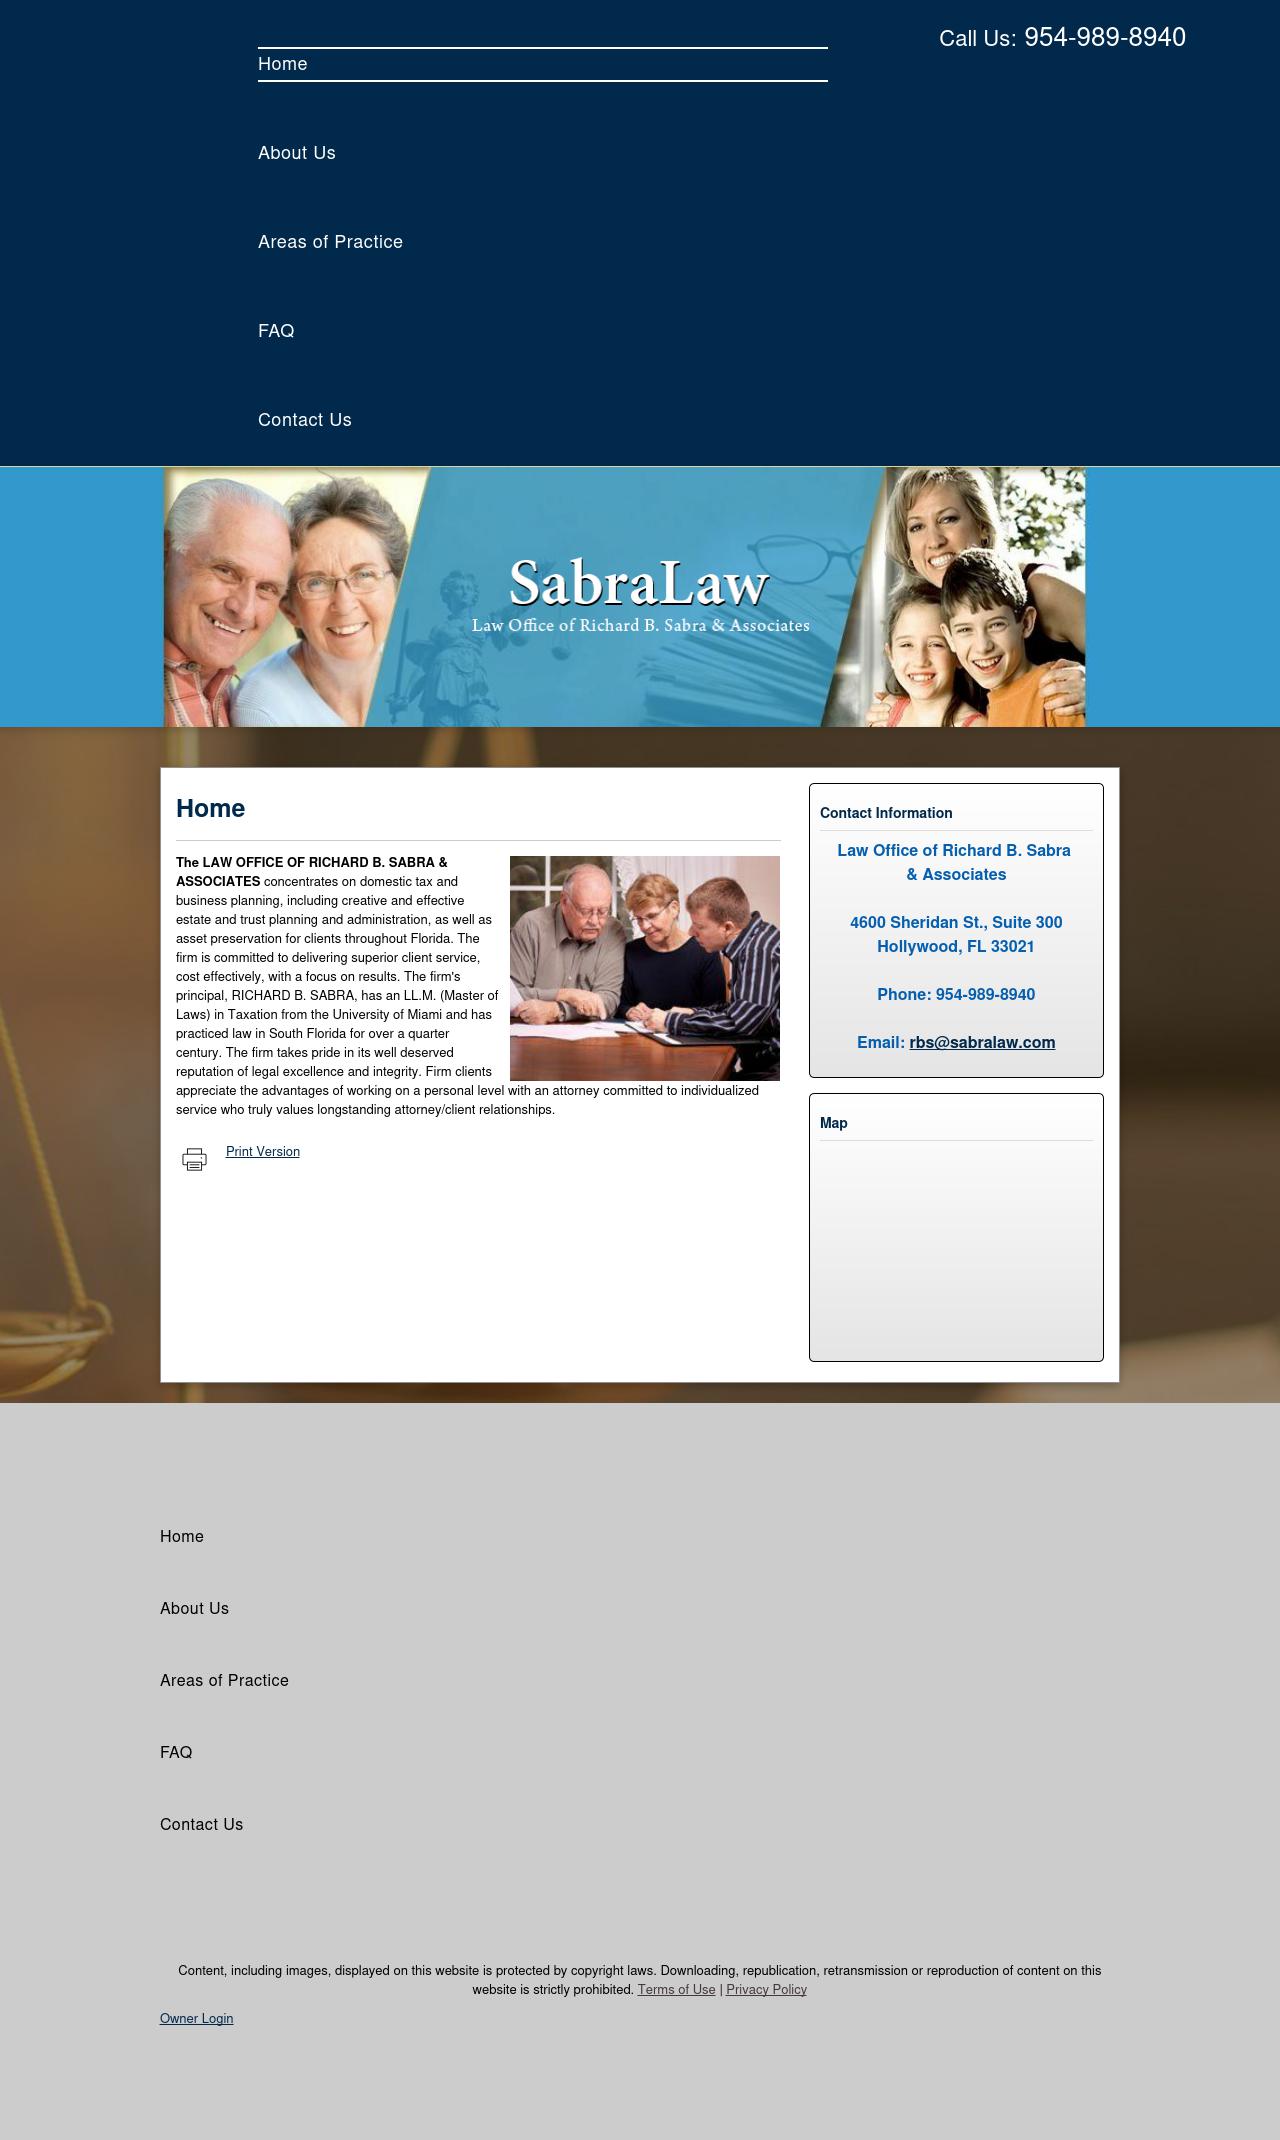 Law Office Of Richard B. Sabra & Associates - Hollywood FL Lawyers